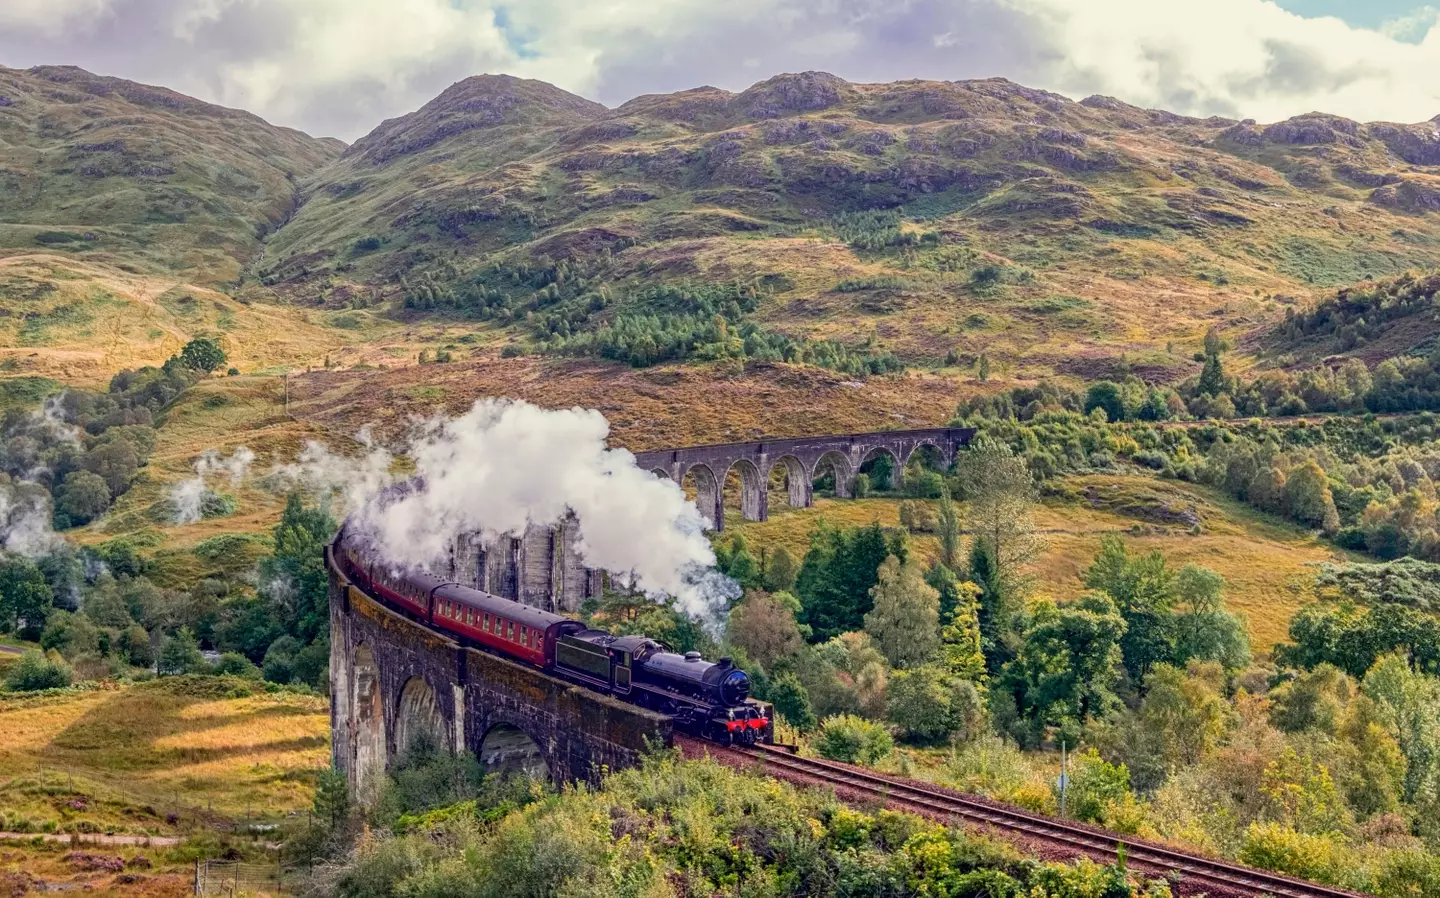 The Hogwarts Express, chugging through the Highlands.